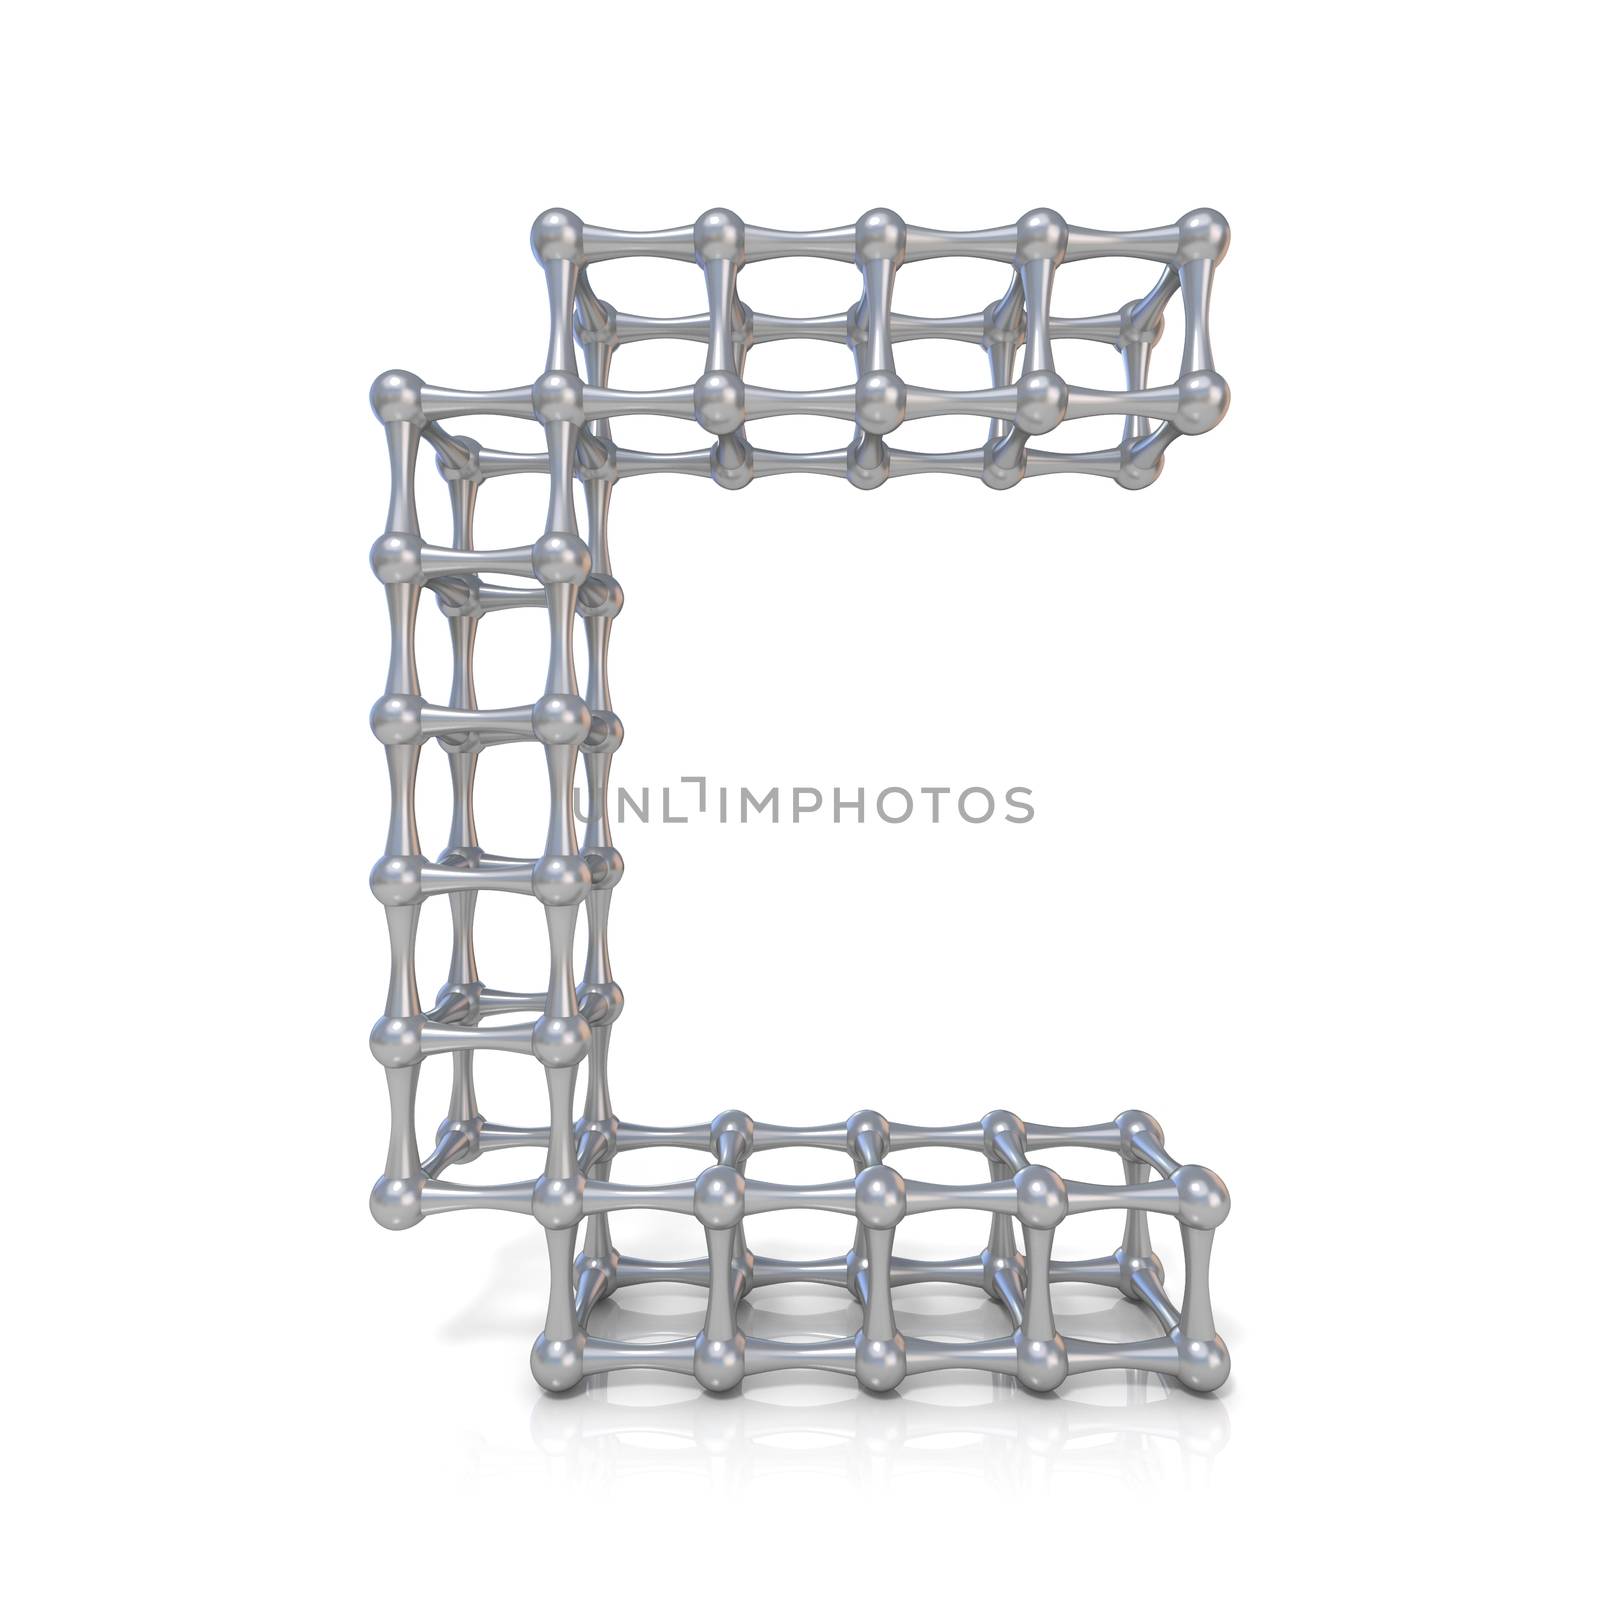 Metal lattice font letter C 3D render illustration isolated on white background